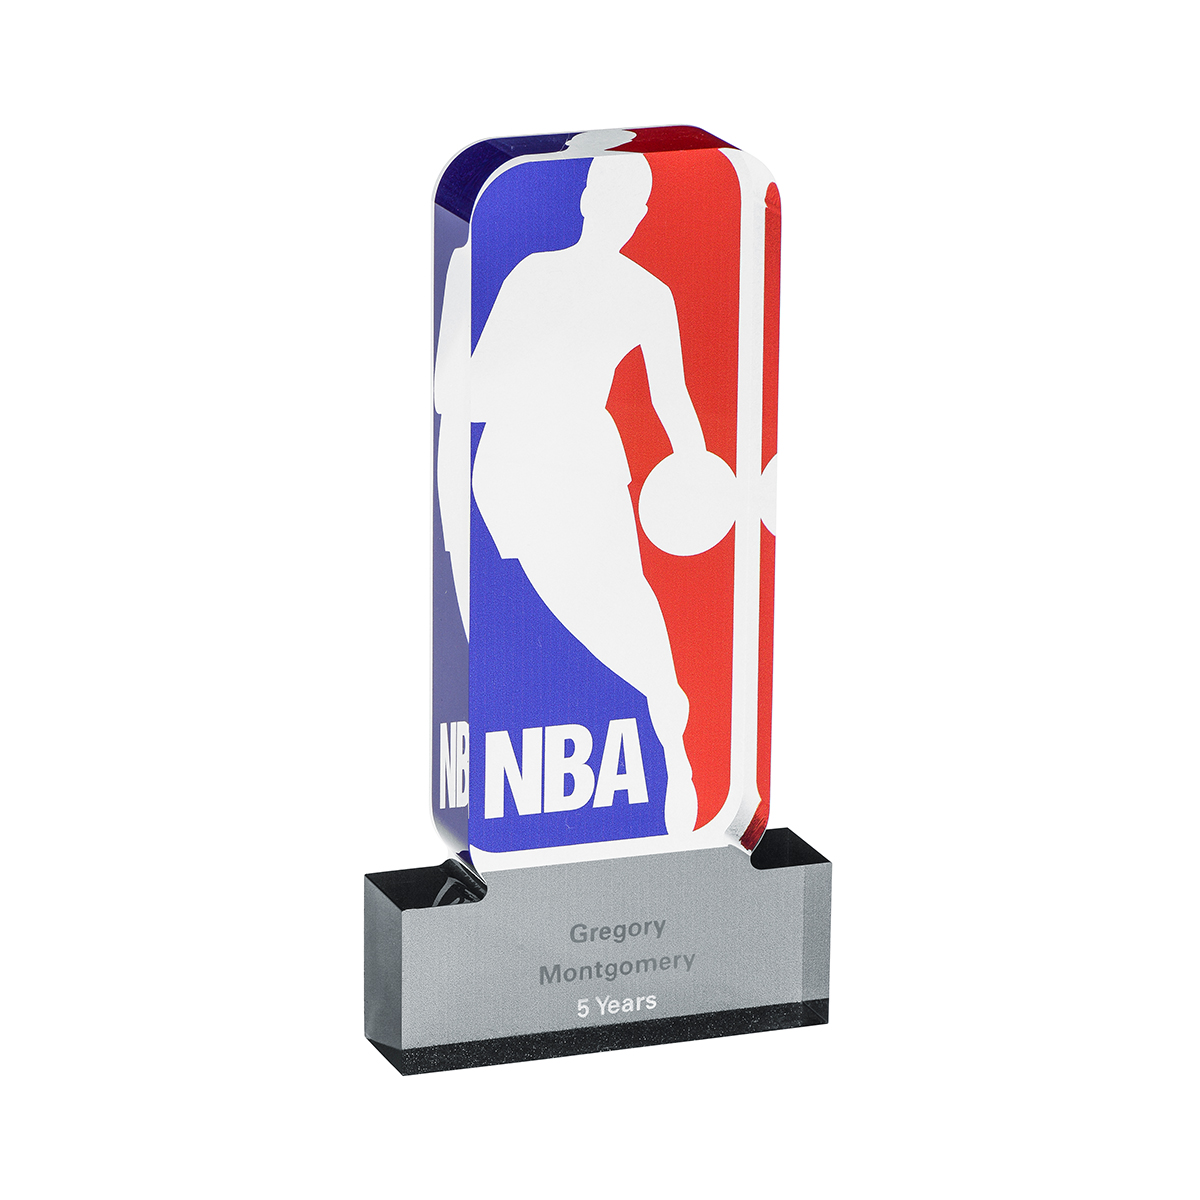 SRH Images_011_NBA Acrylic Trophy.jpg